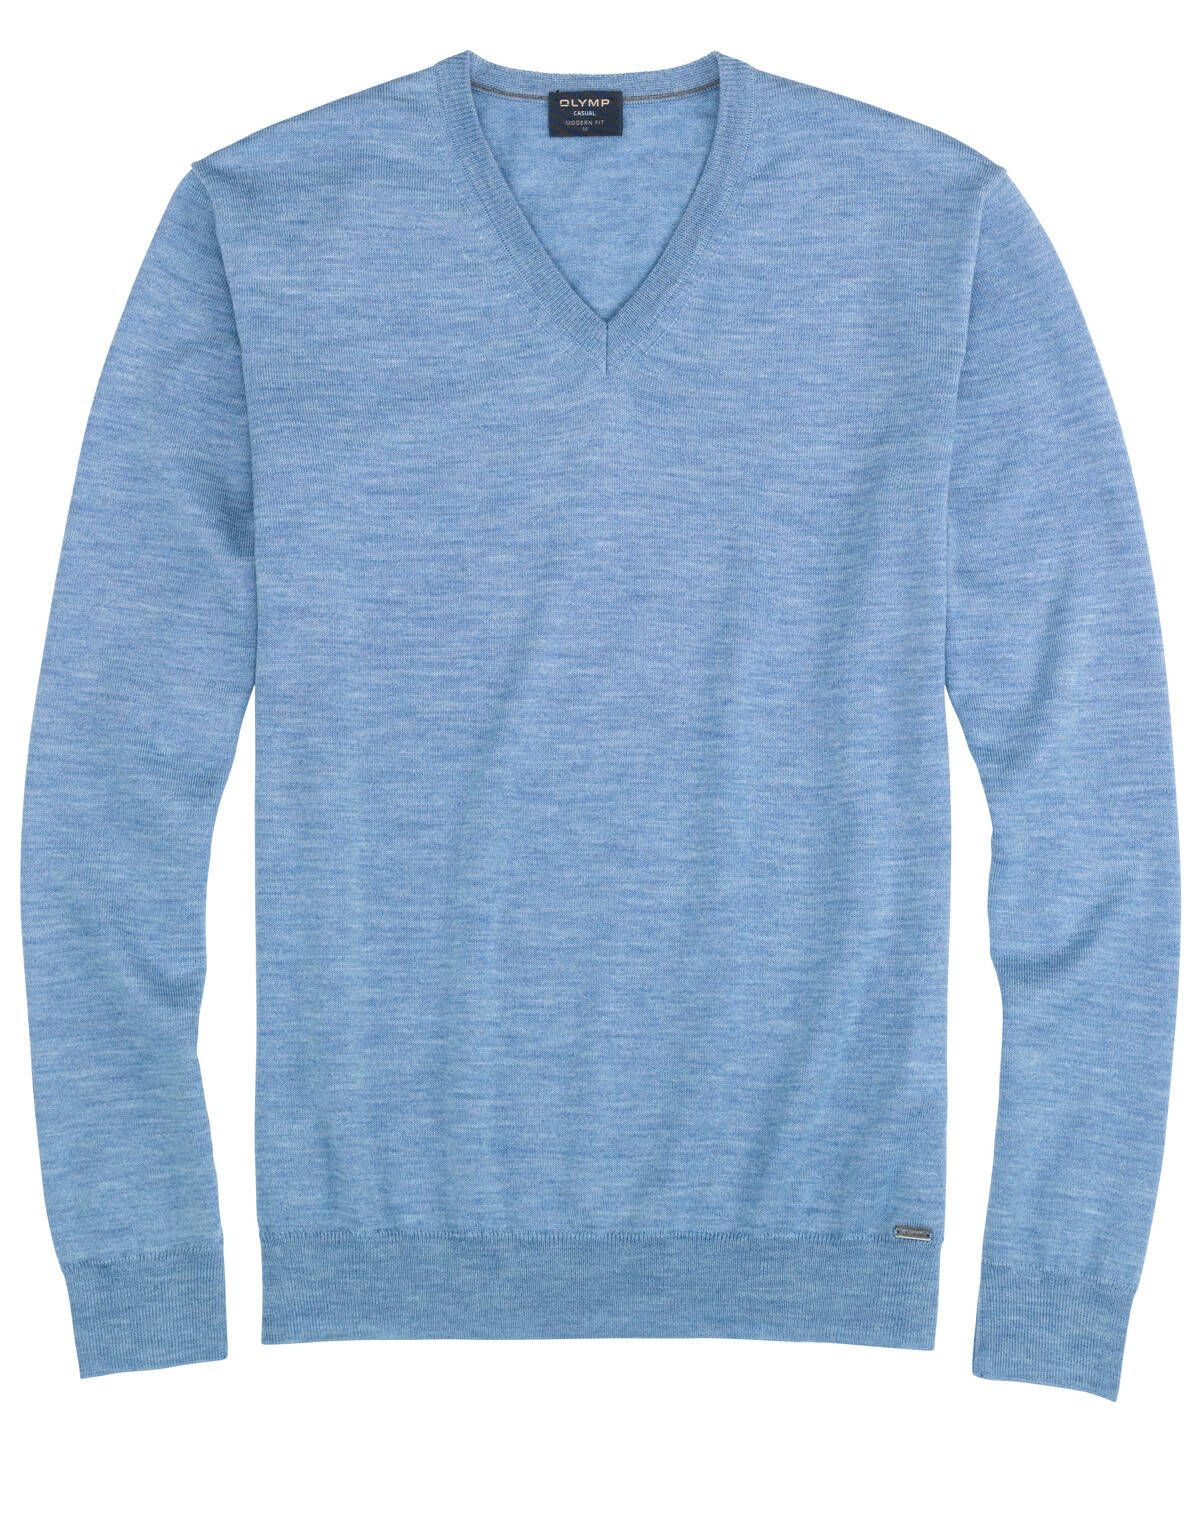 Пуловер голубой мужской OLYMP, modern fit[ГОЛУБОЙ]